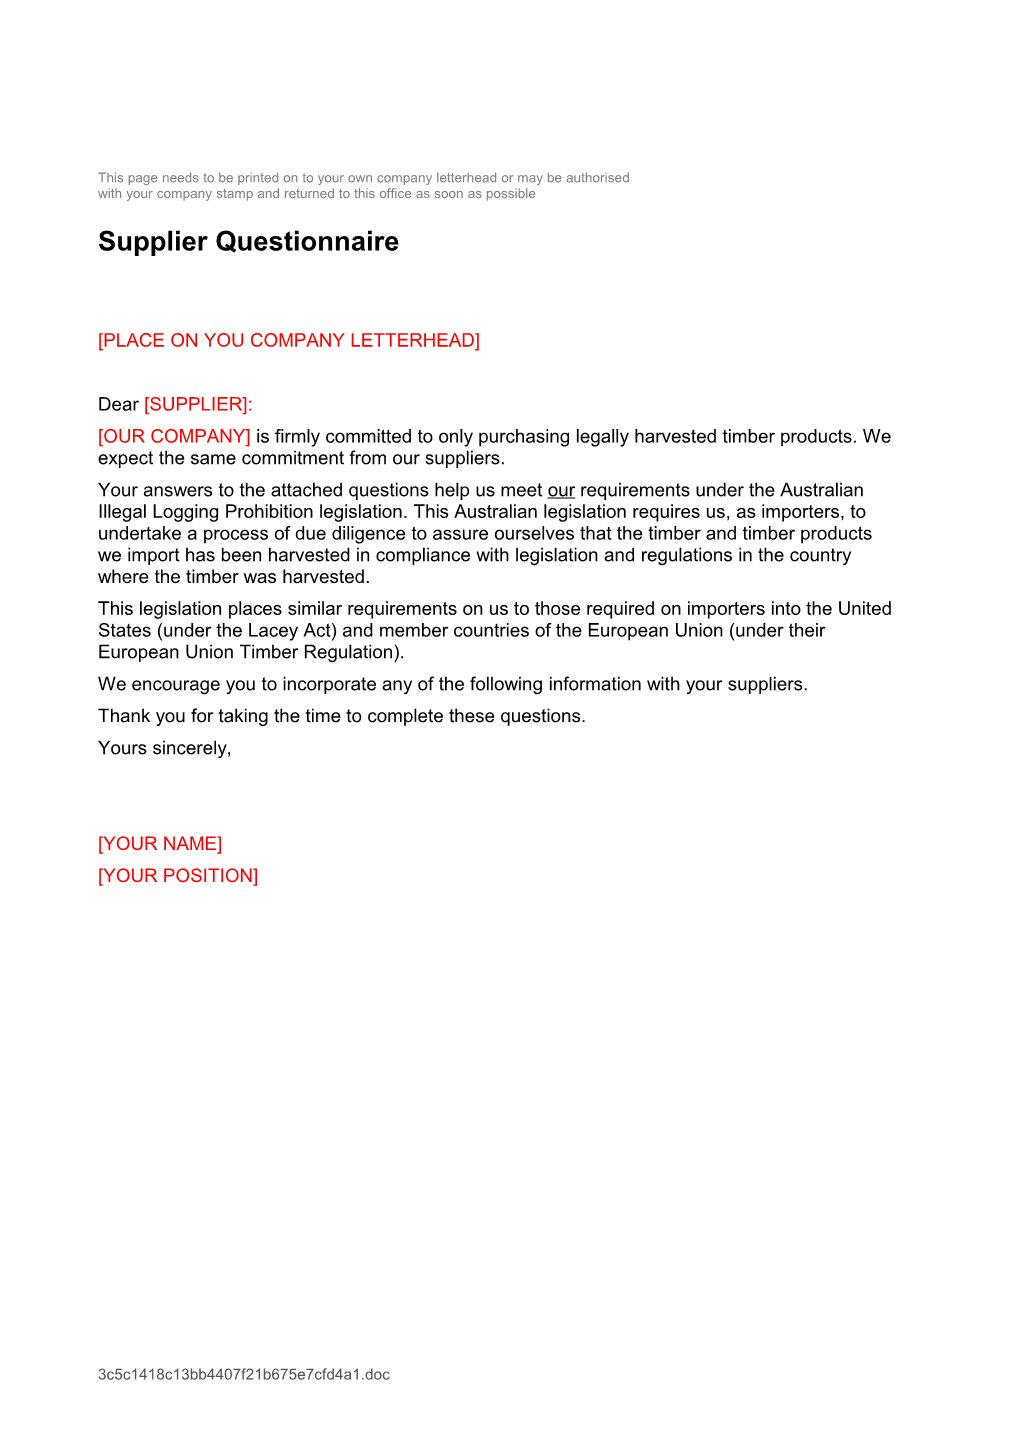 Illegal Logging Supplier Questionnaire